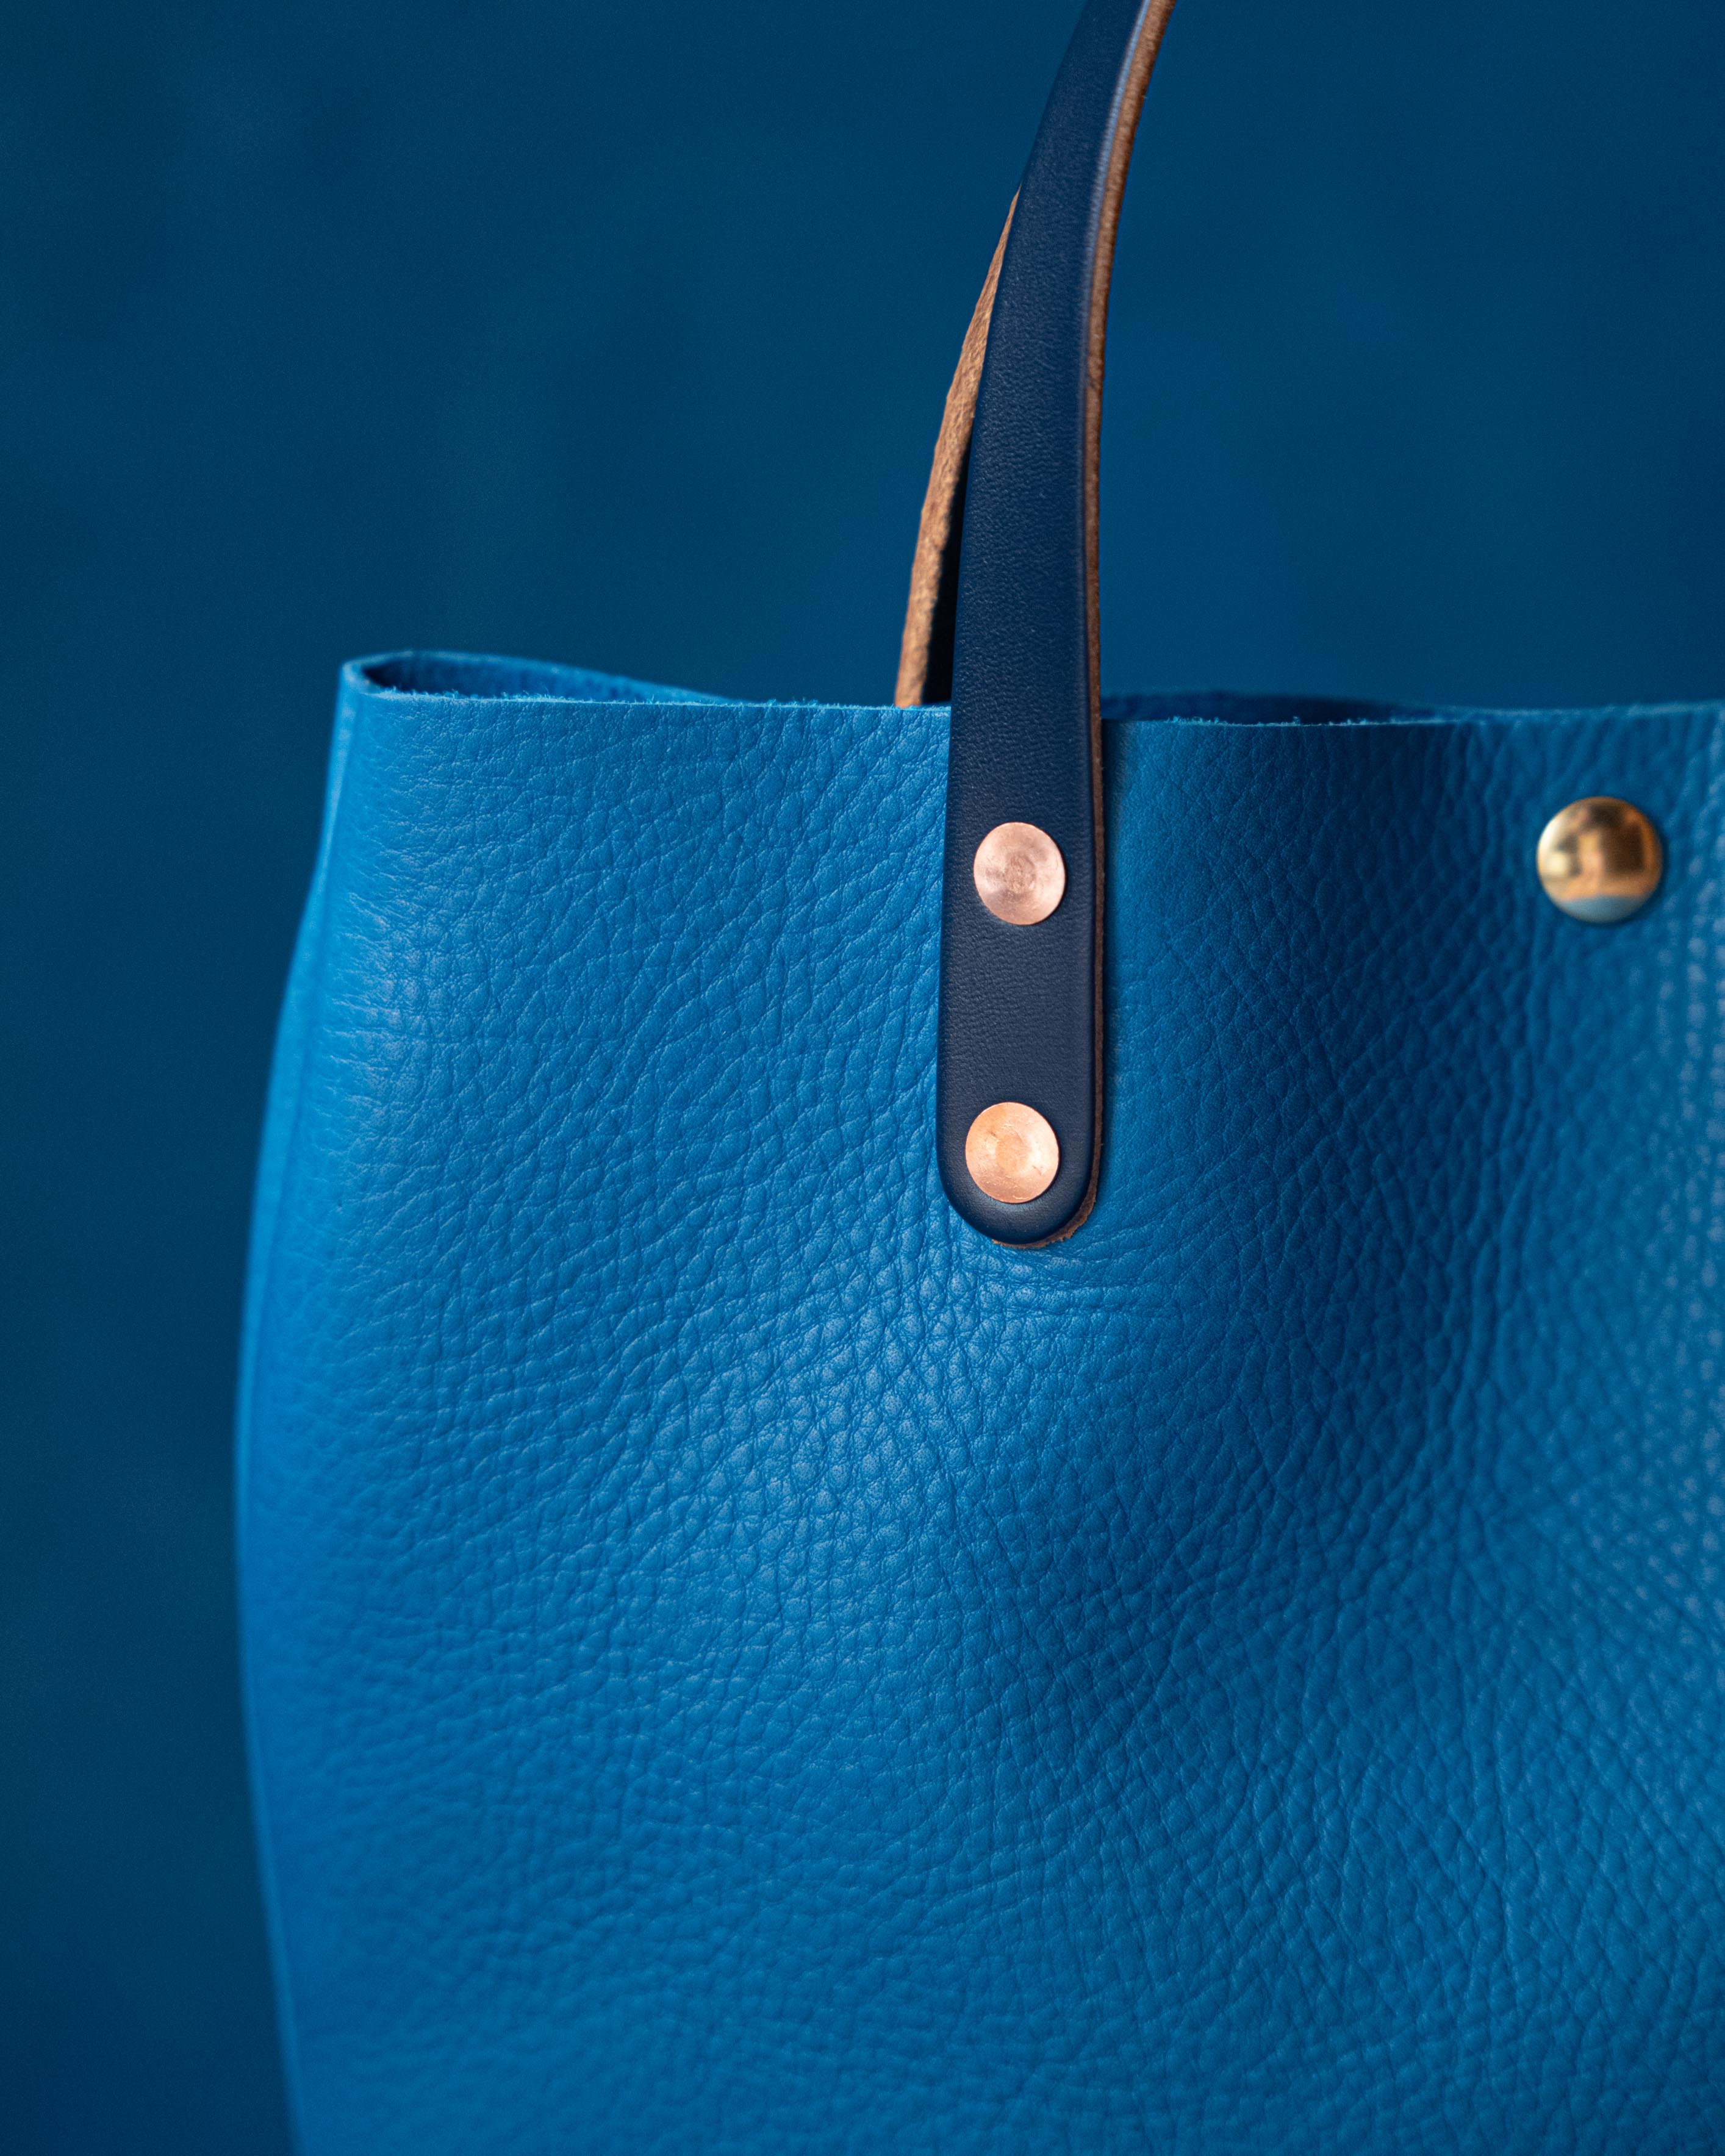 FWRD Renew Hermes Birkin 35 Handbag in Blue